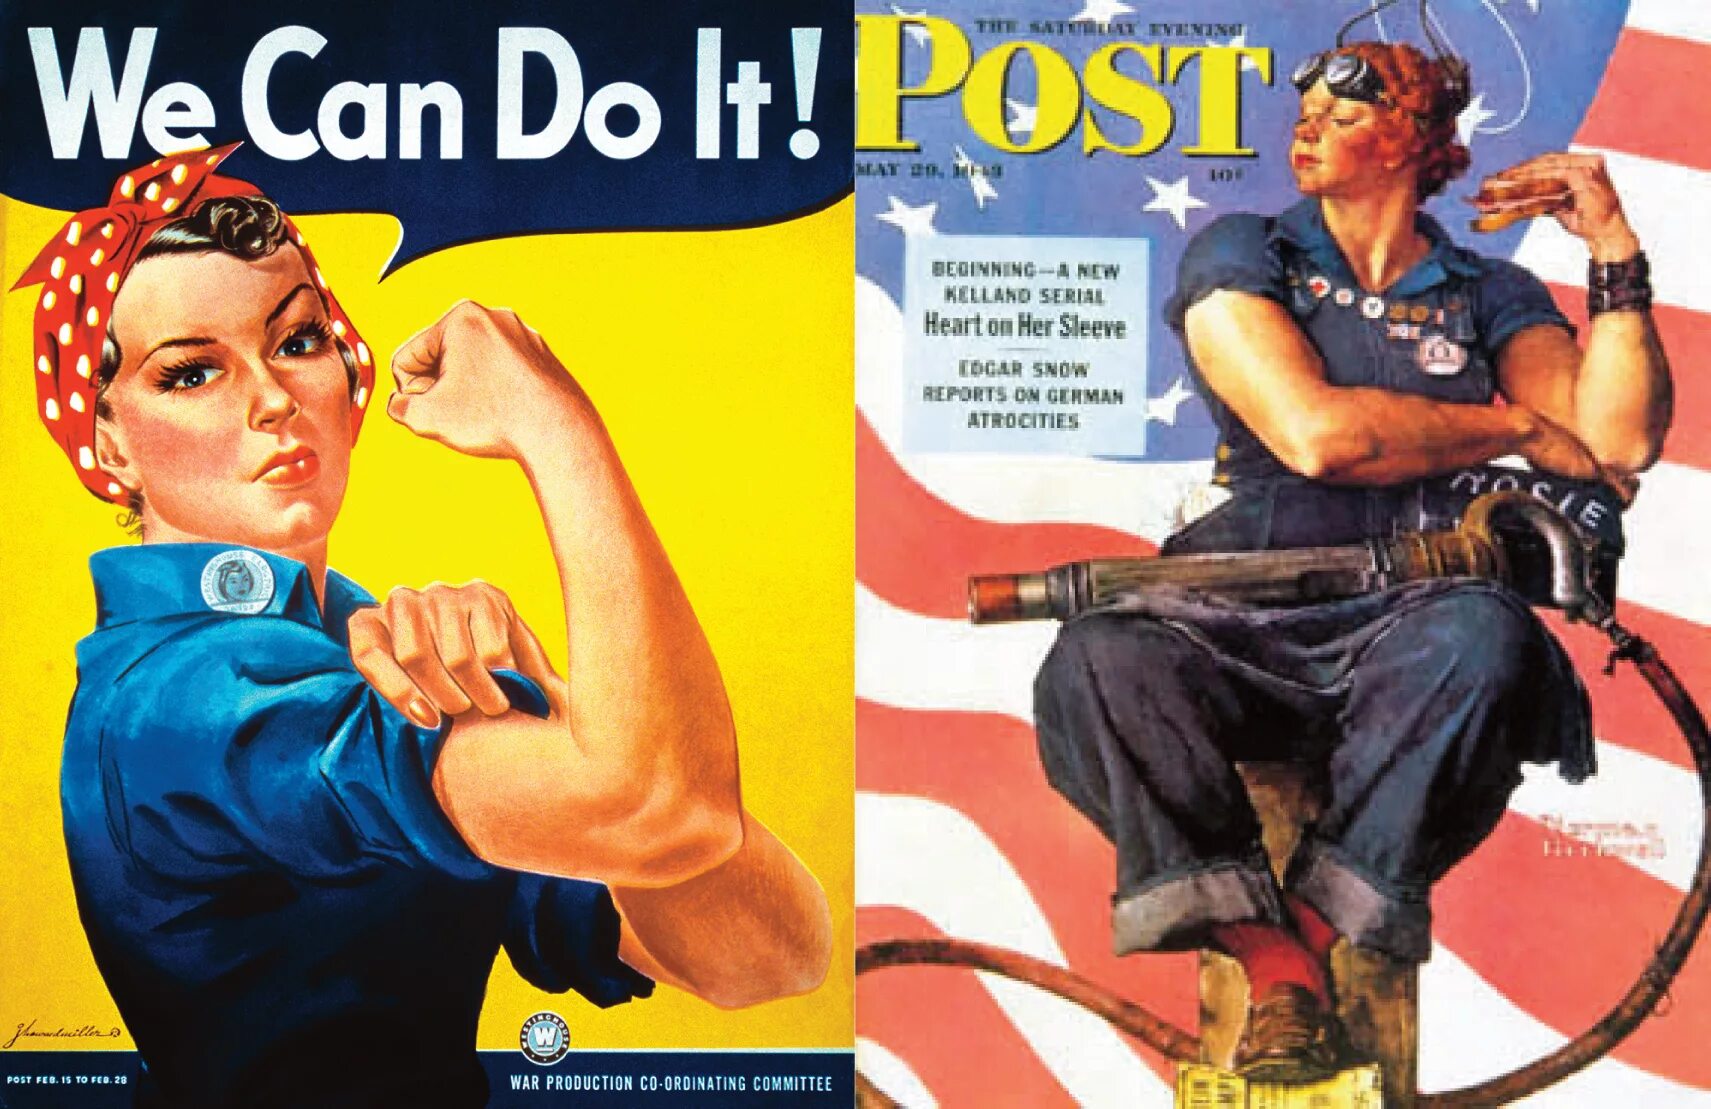 We can do a lot. Rosie the Riveter плакат. Плакат «we can do it! ». Клепальщица Рози плакат. Американские постеры.